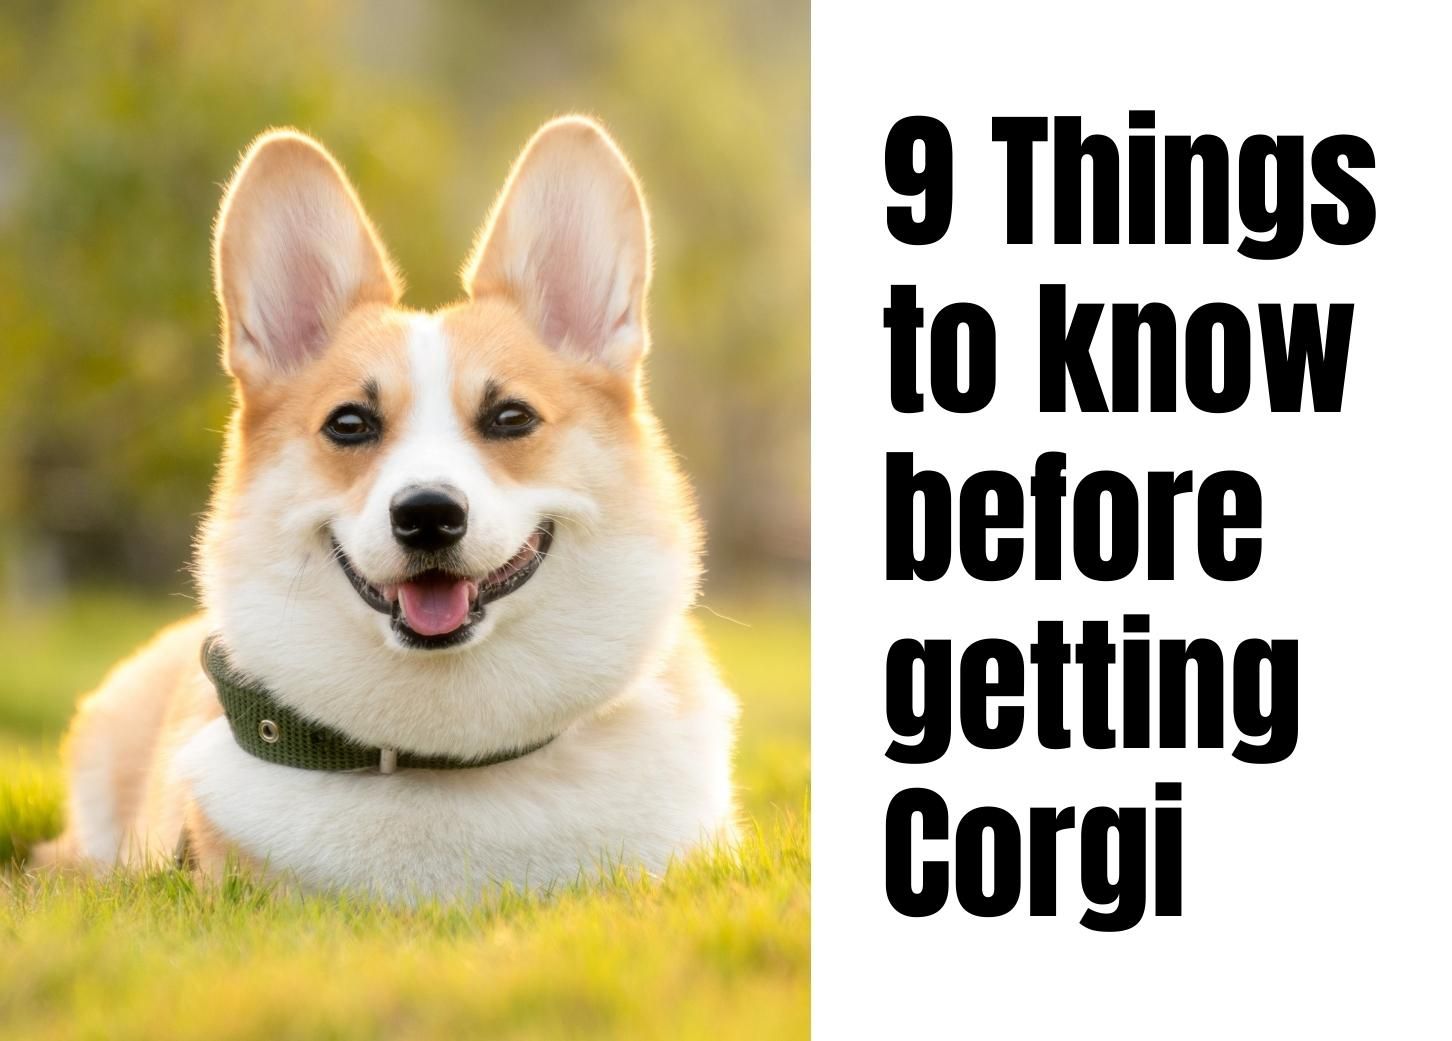 are corgis active dogs